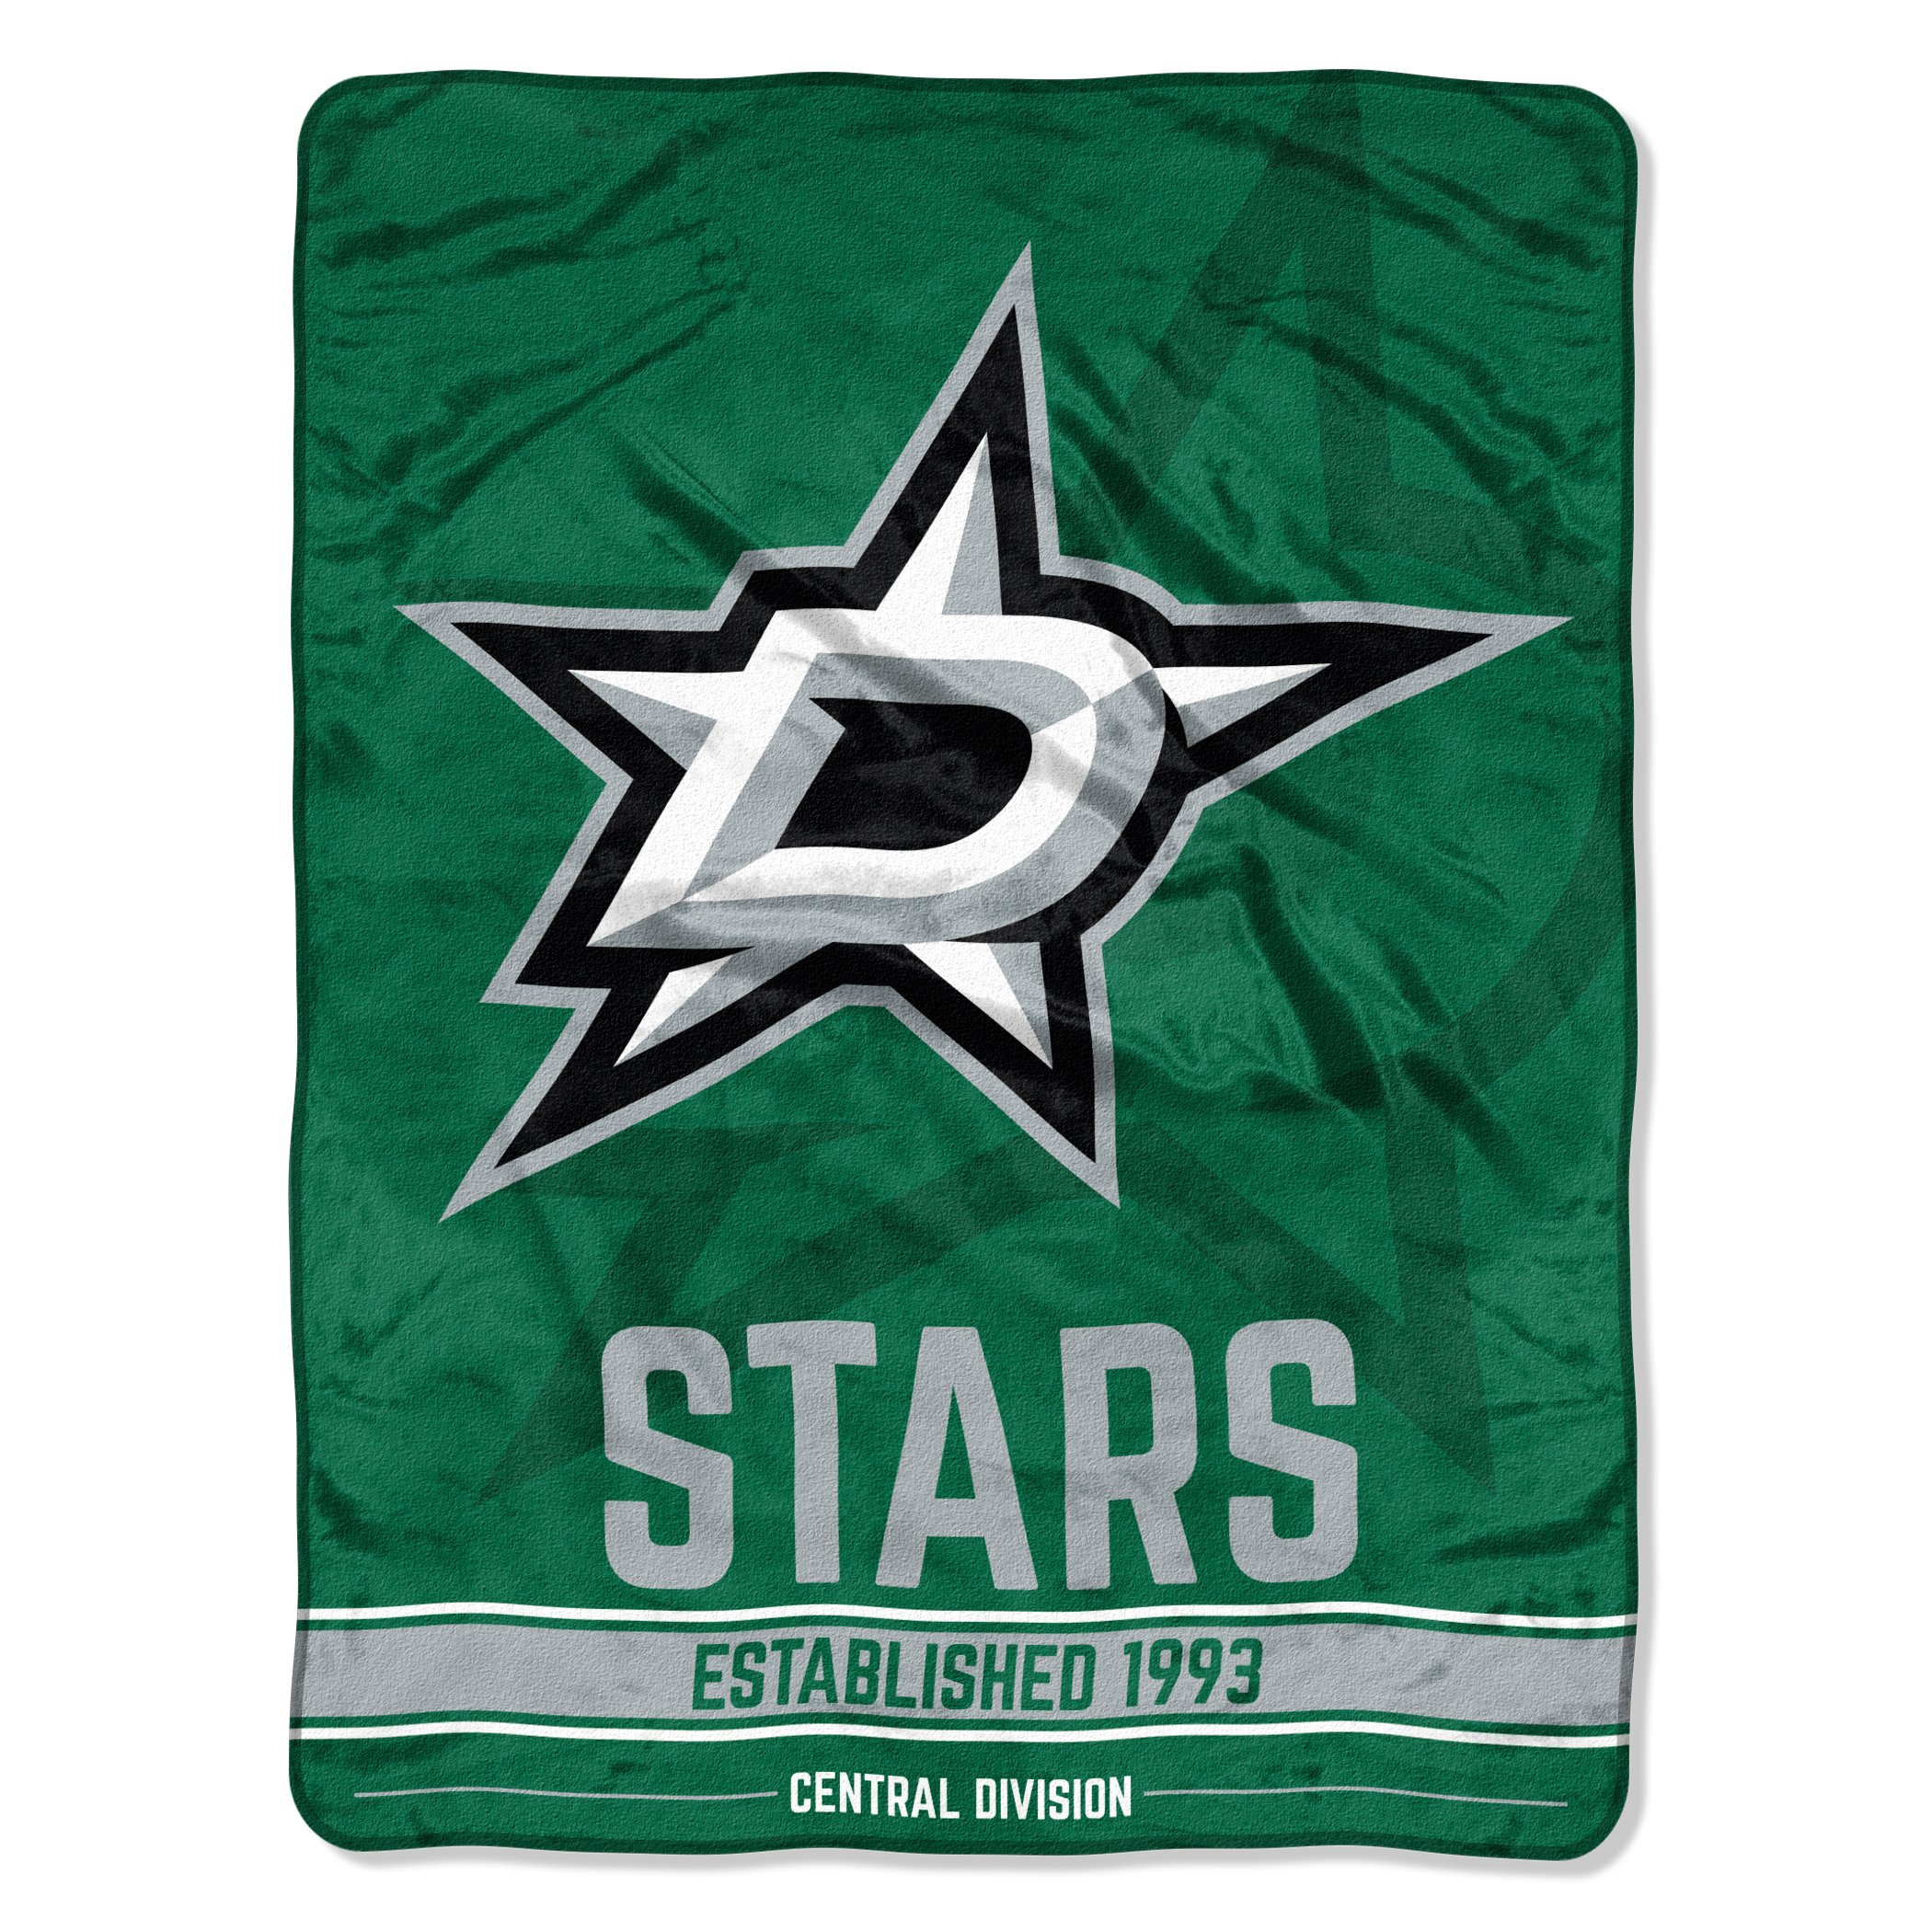 NHL Blankets (Chicago Blackhawks + Dallas Stars) - $5.99 and $9.99 at Amazon